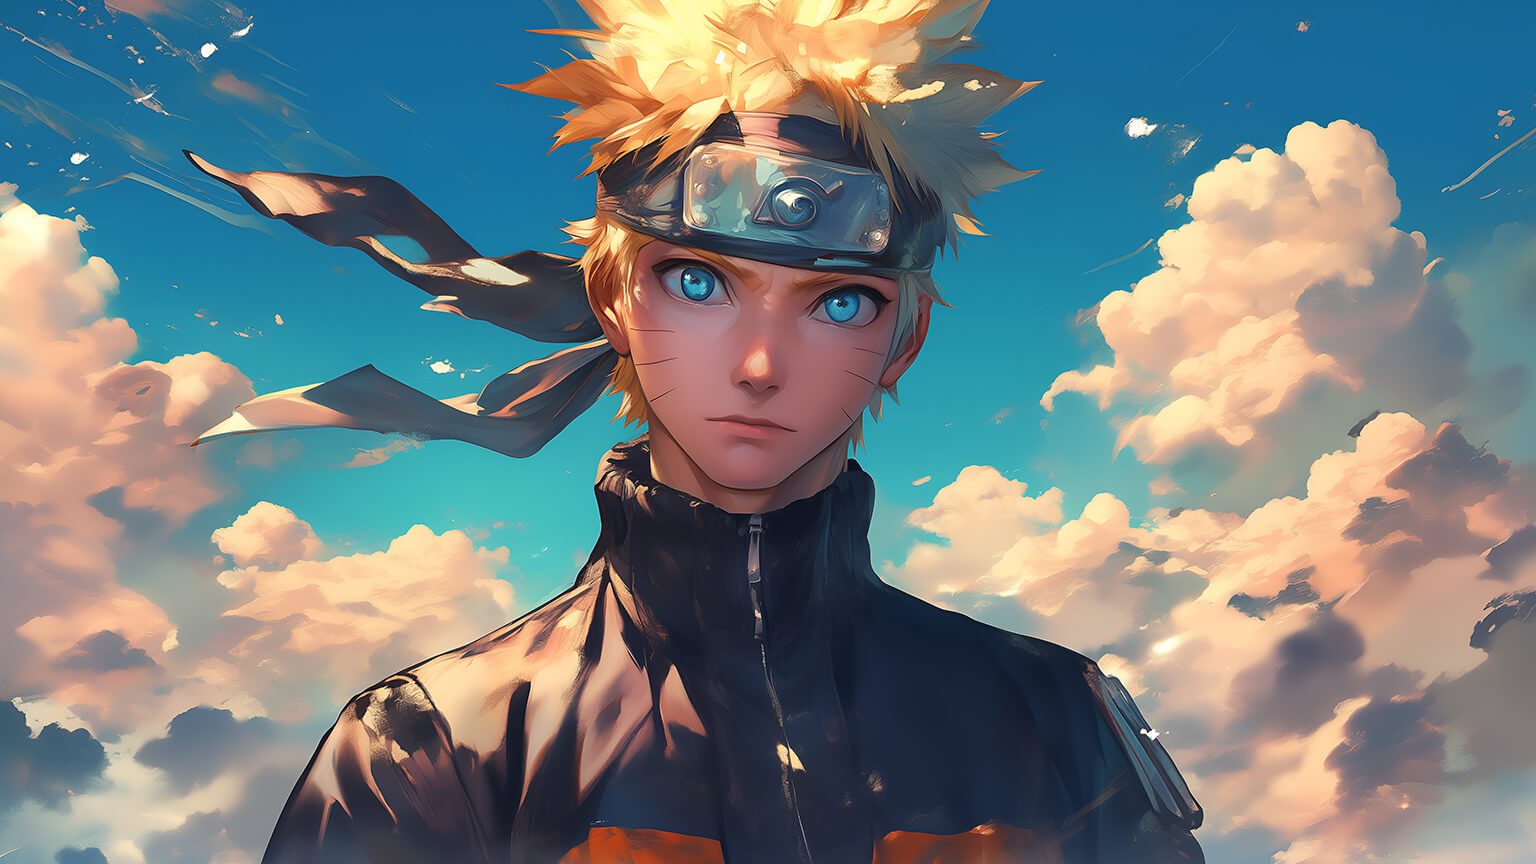 Beautiful Naruto & Clouds Desktop Wallpaper - Naruto Wallpaper 4K